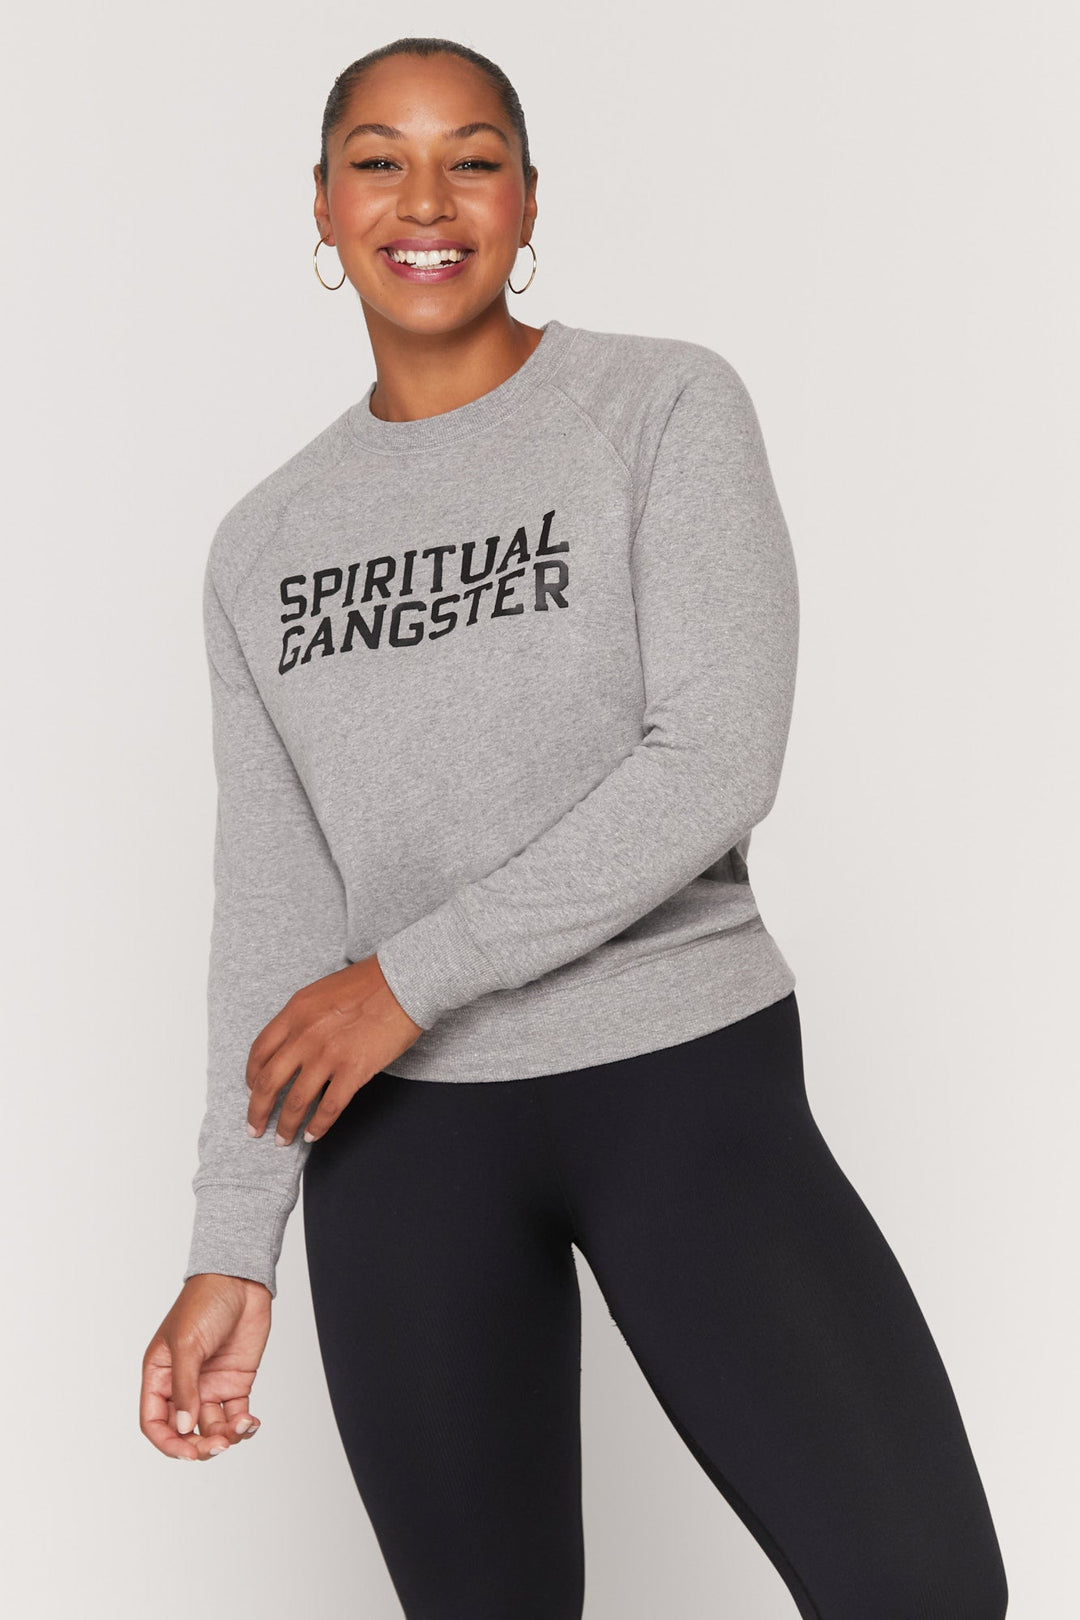 Spiritual Gangster Sweatshirt - Heather Grey - Sun Diego Boardshop